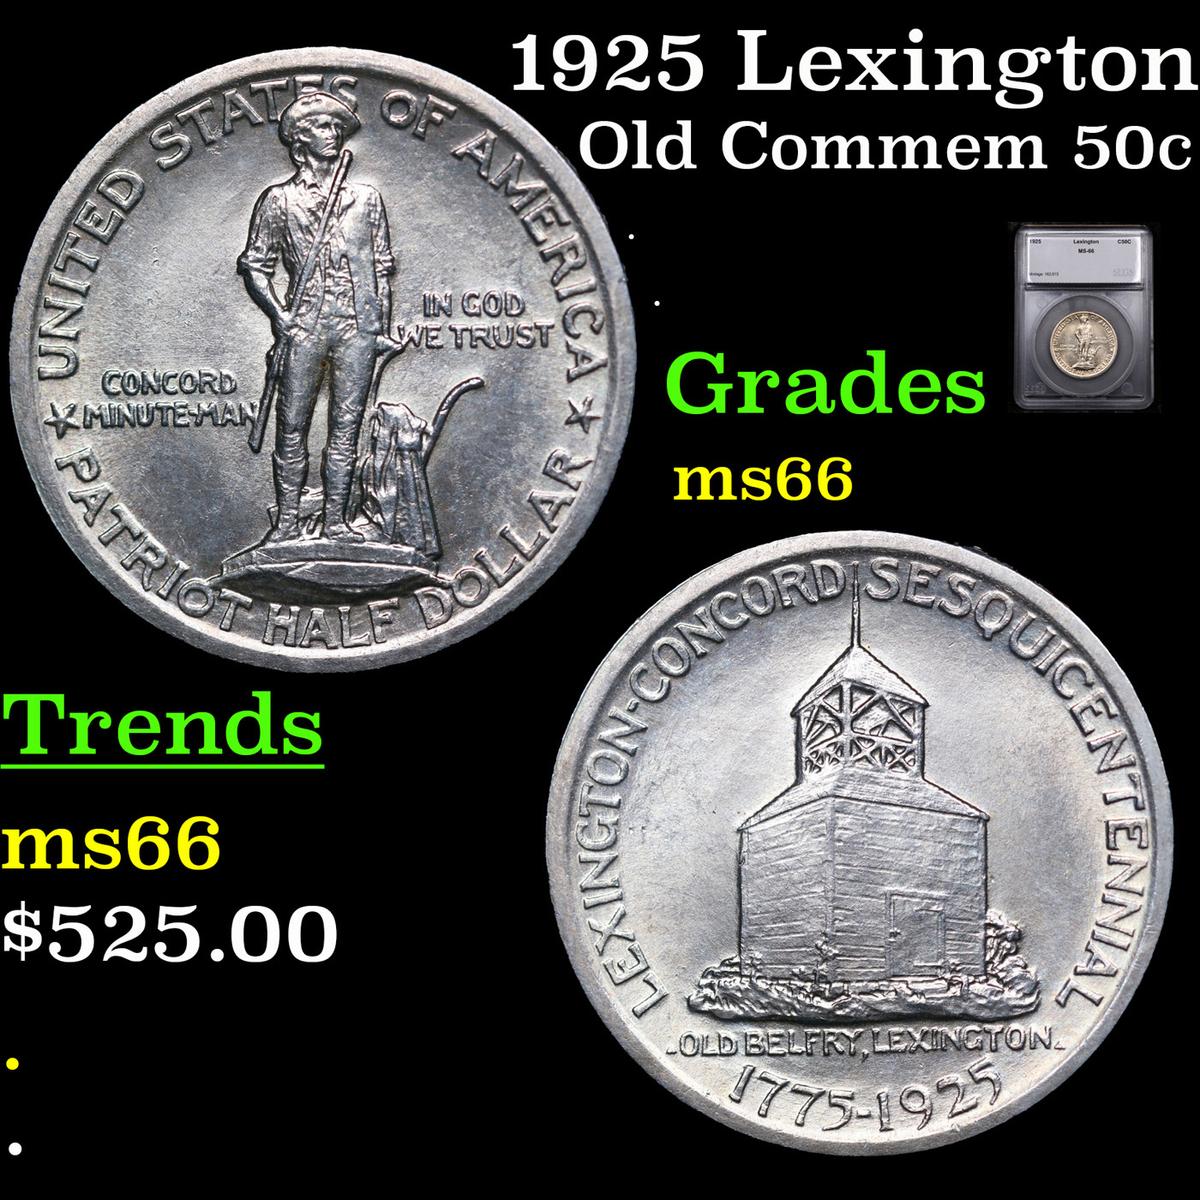 1925 Lexington Old Commem Half Dollar 50c Graded ms66 By SEGS